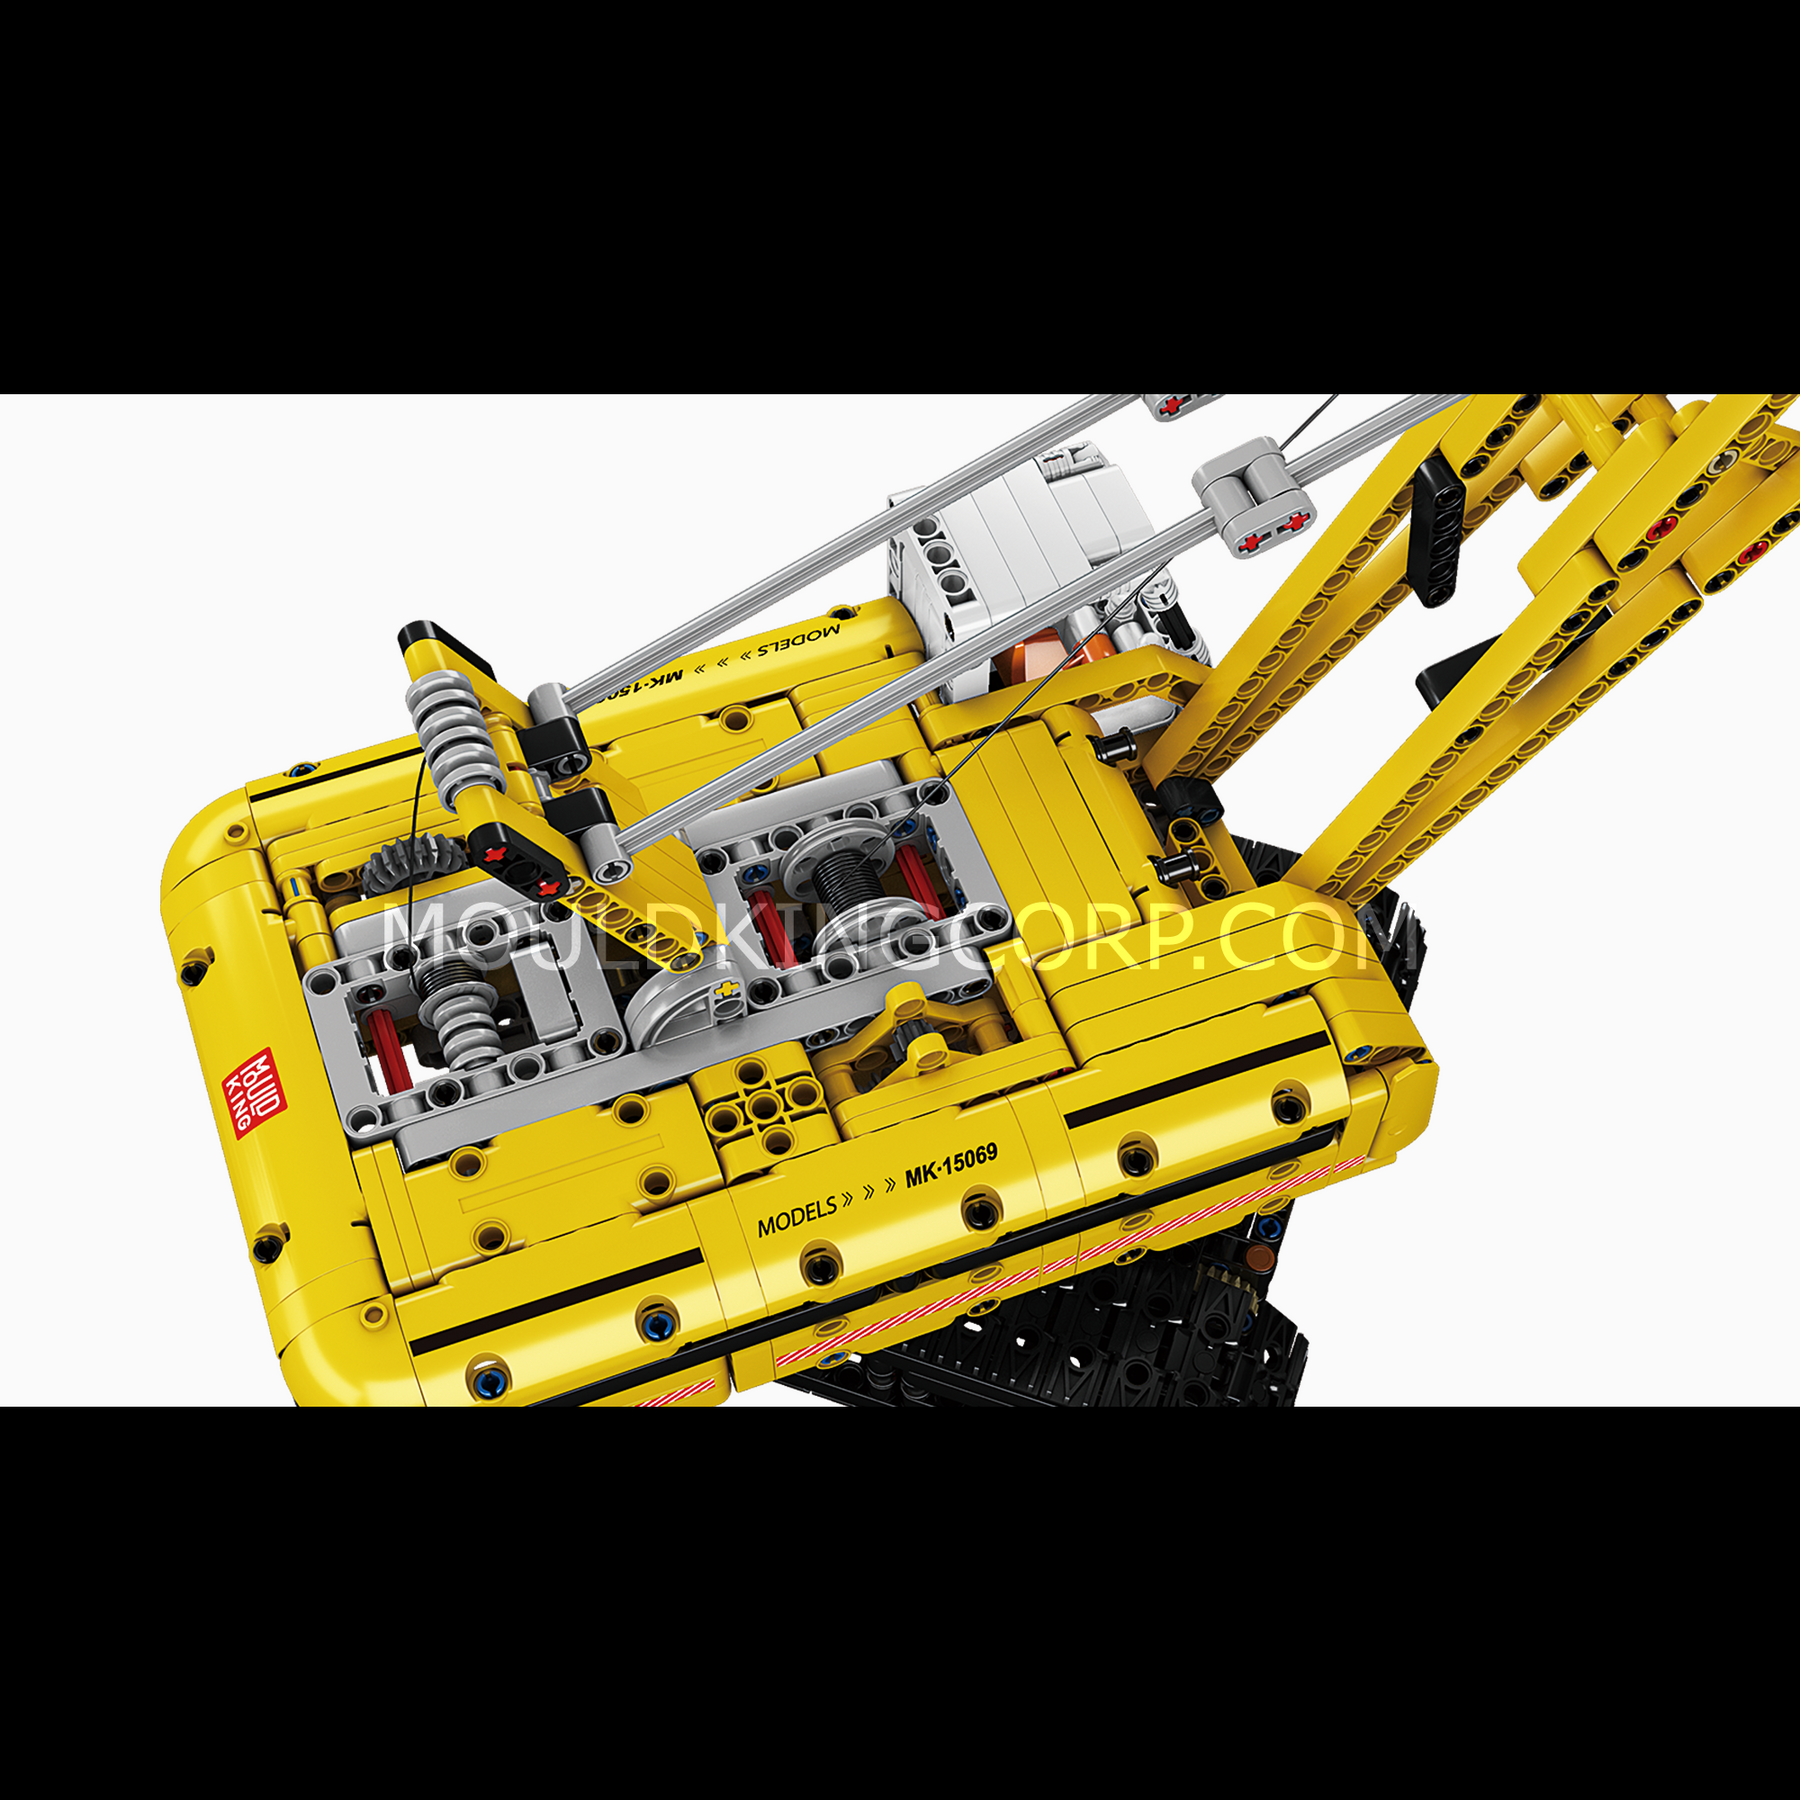  Mould King 15070 Crawler Crane Building Block Kit, Heavy Duty  Crawler Crane Construction Vehicles Model Toy, Remote Control Crane  Building Sets, 1292 Pieces : Toys & Games